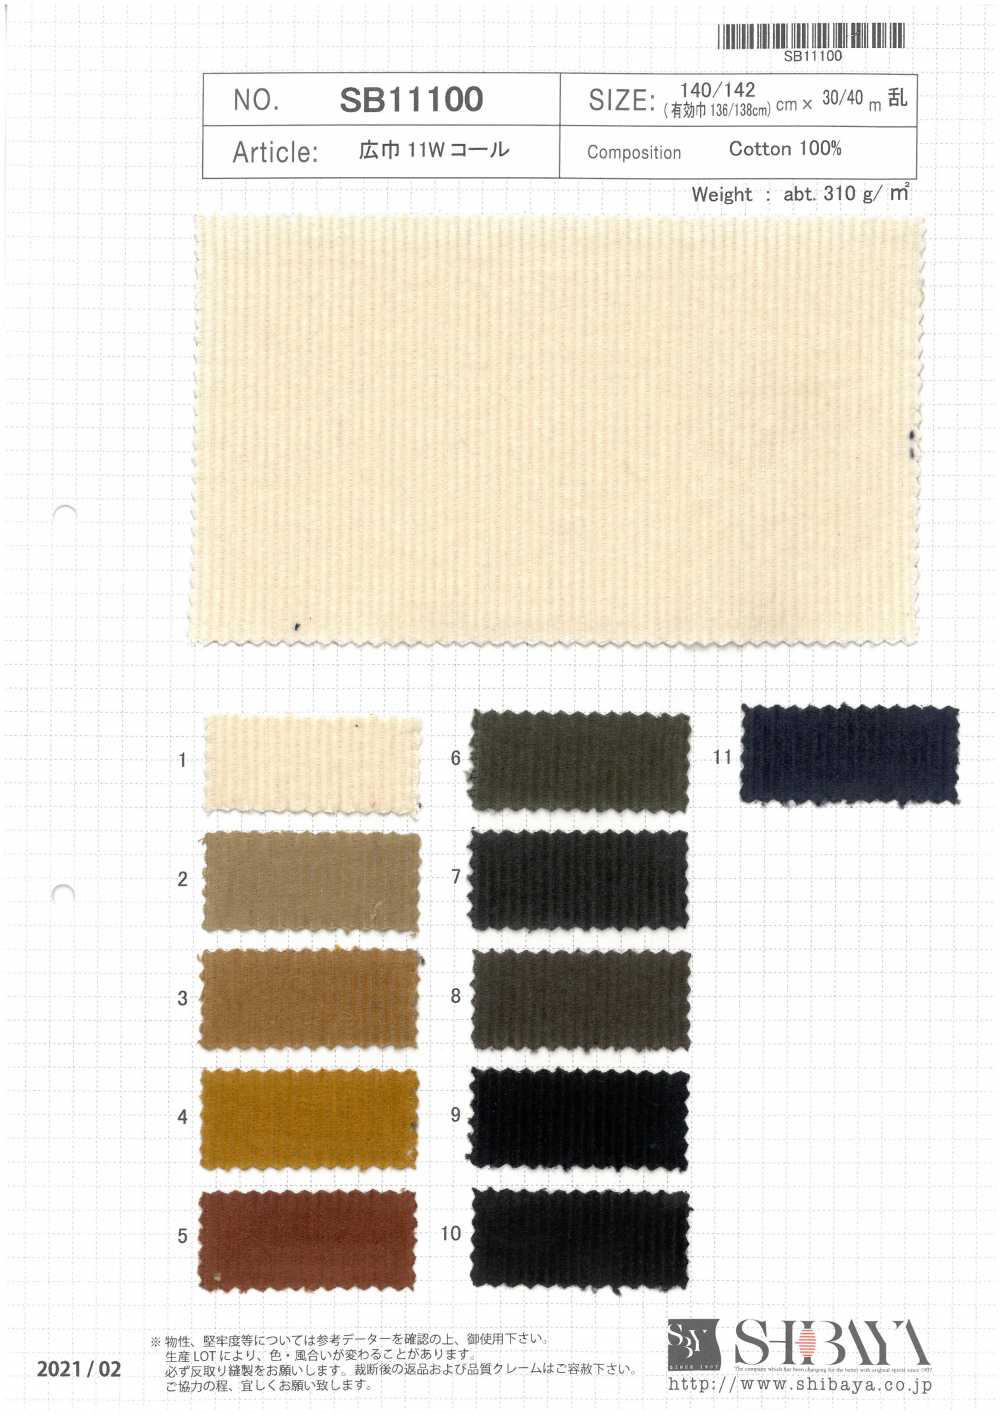 SB11100 Wide Width Corduroy[Textile / Fabric] SHIBAYA